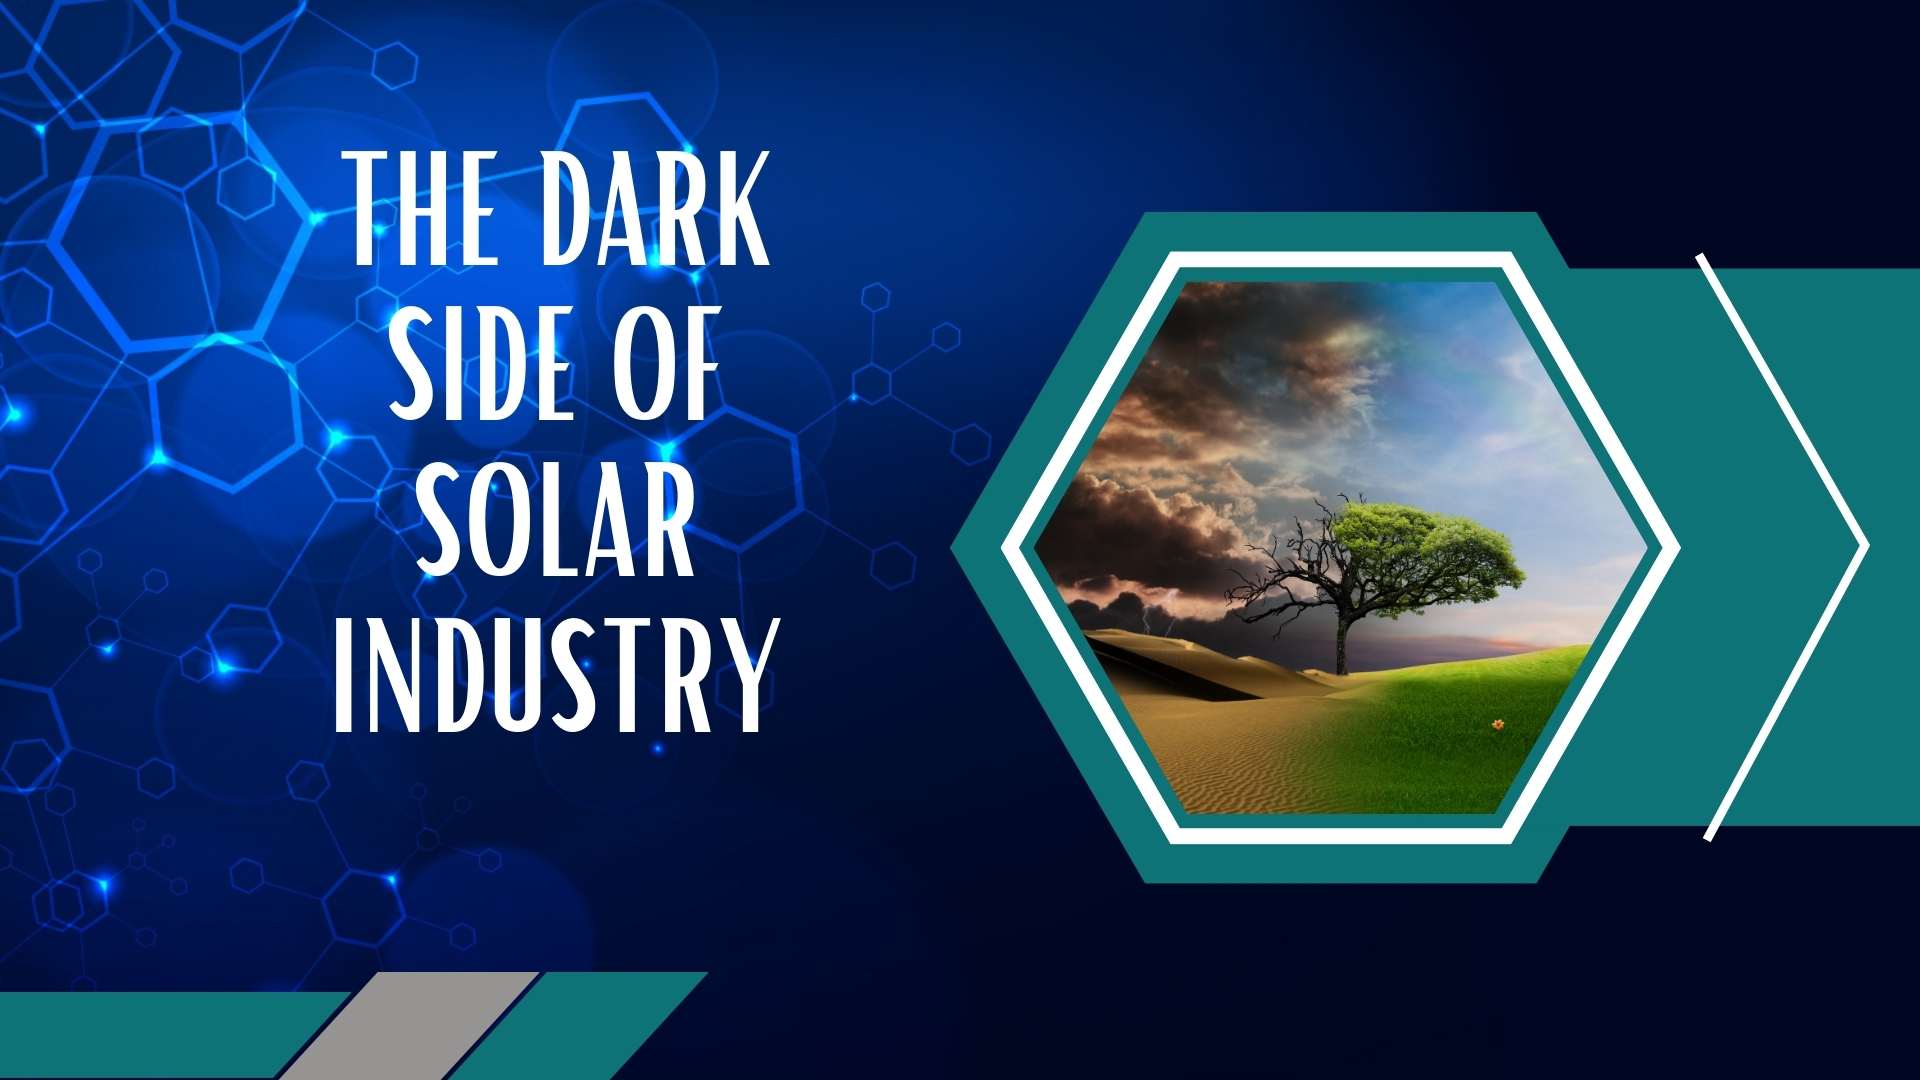 The dark side of solar